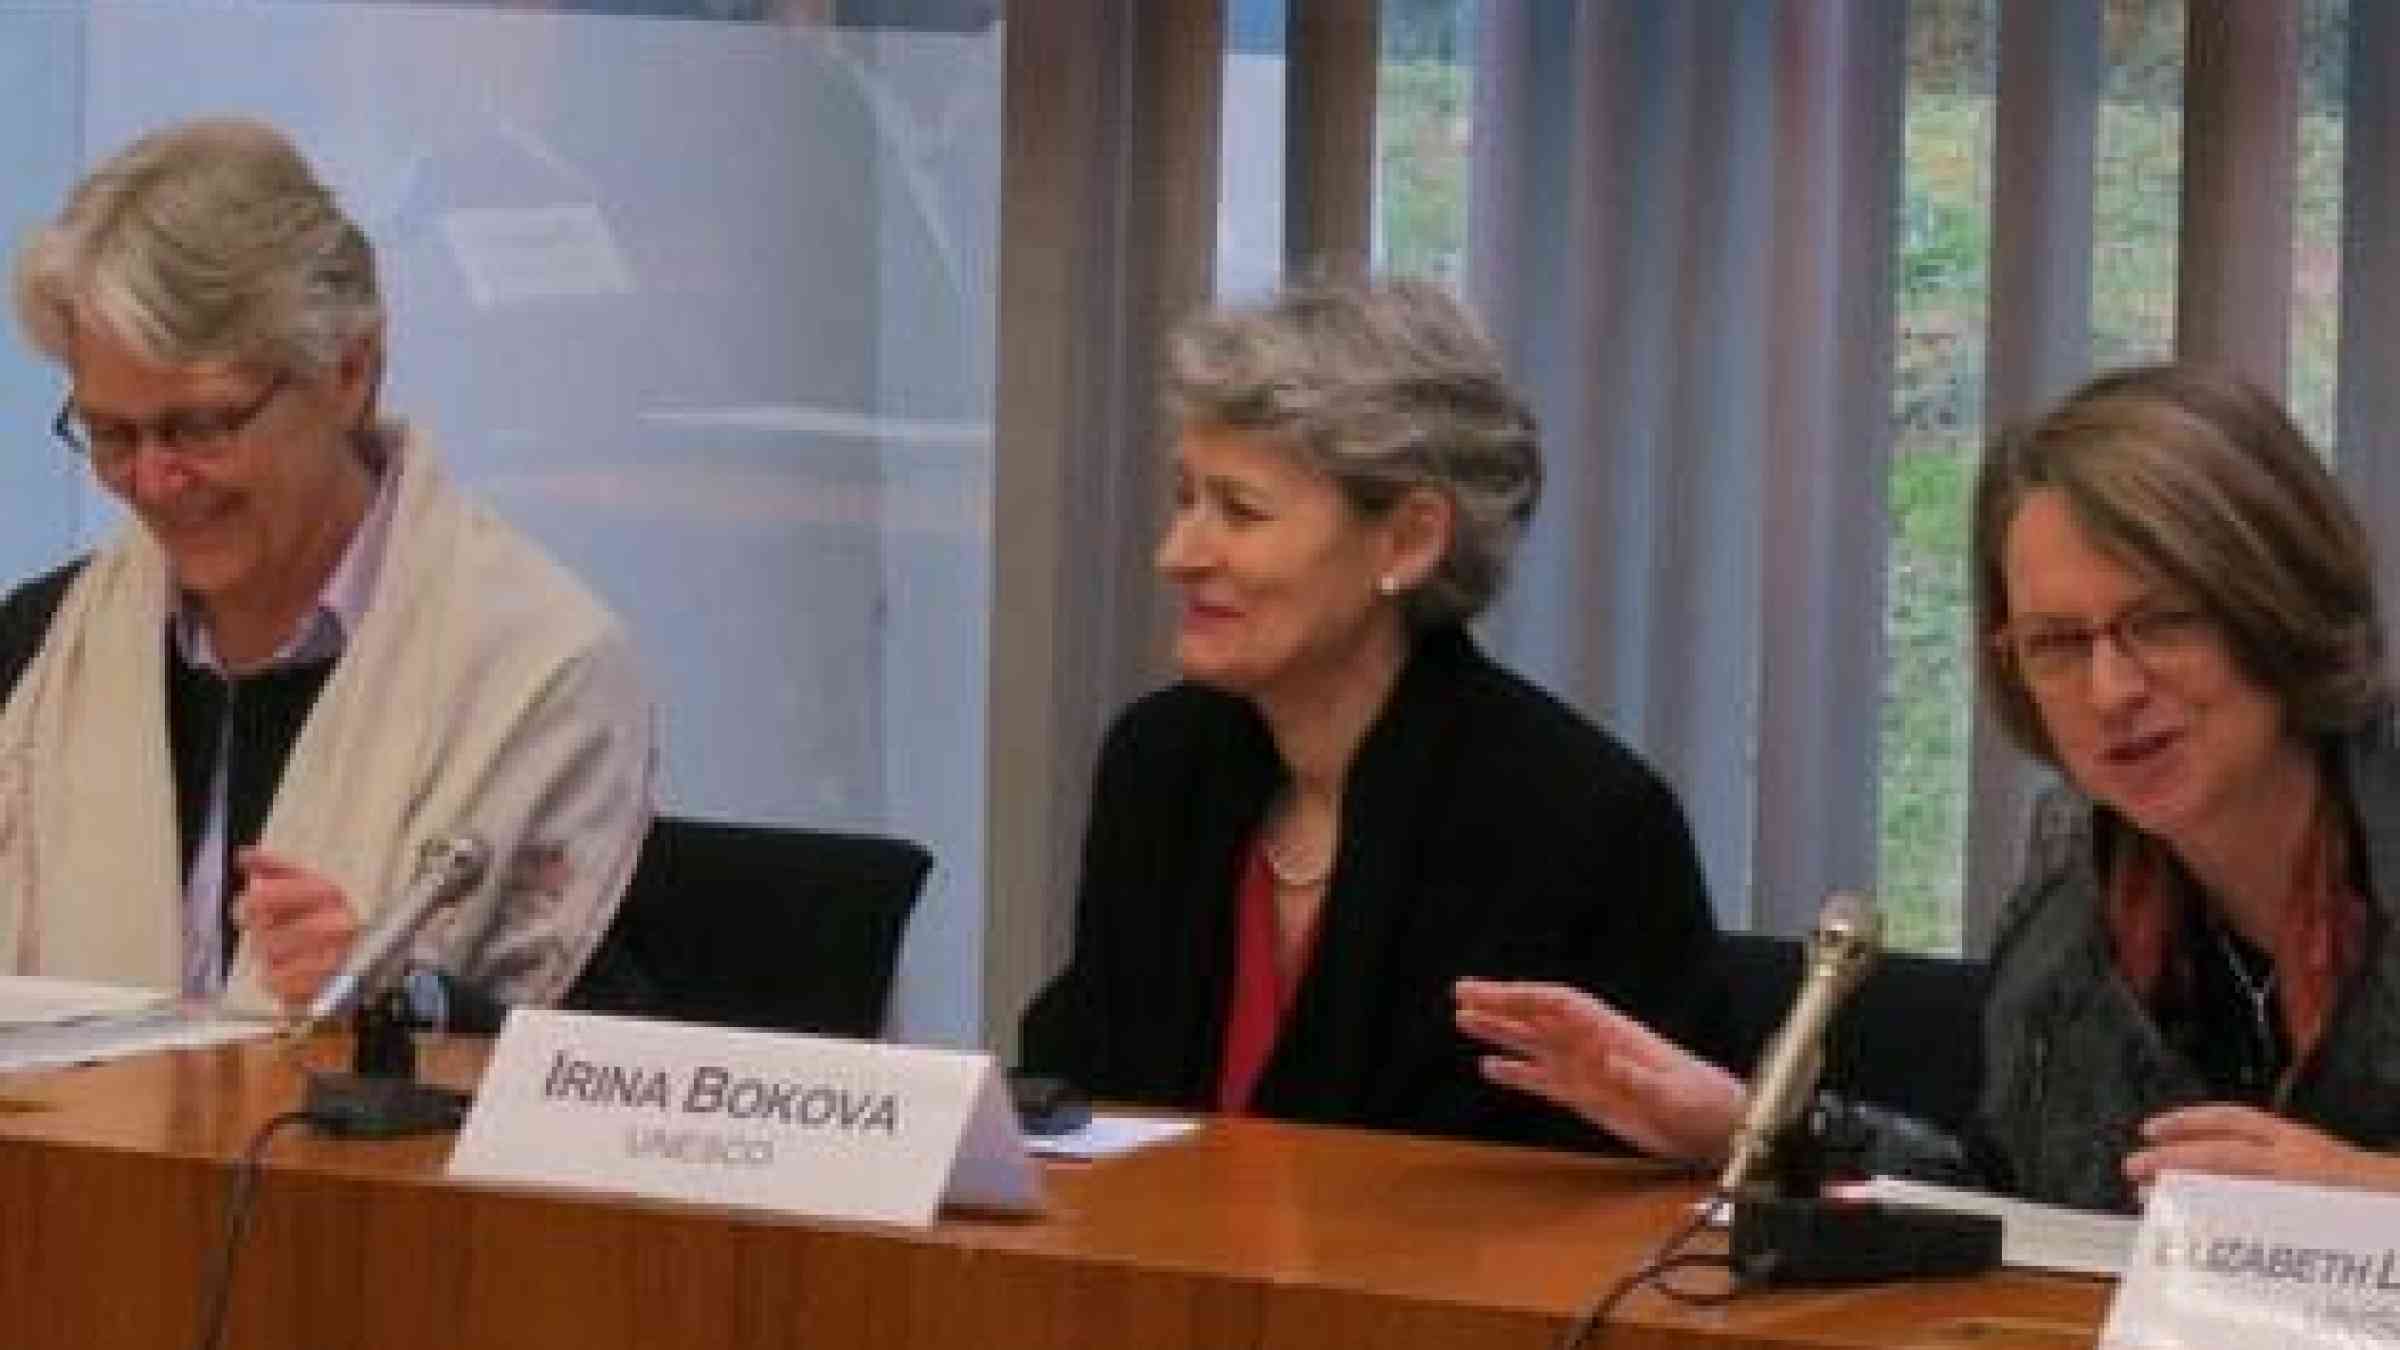 From left: UN Secretary-General Special Representative for Disaster Risk Reduction Margareta Wahlström, UNESCO Director-General Irina Bokova, and UNISDR Director Elizabeth Longworth.